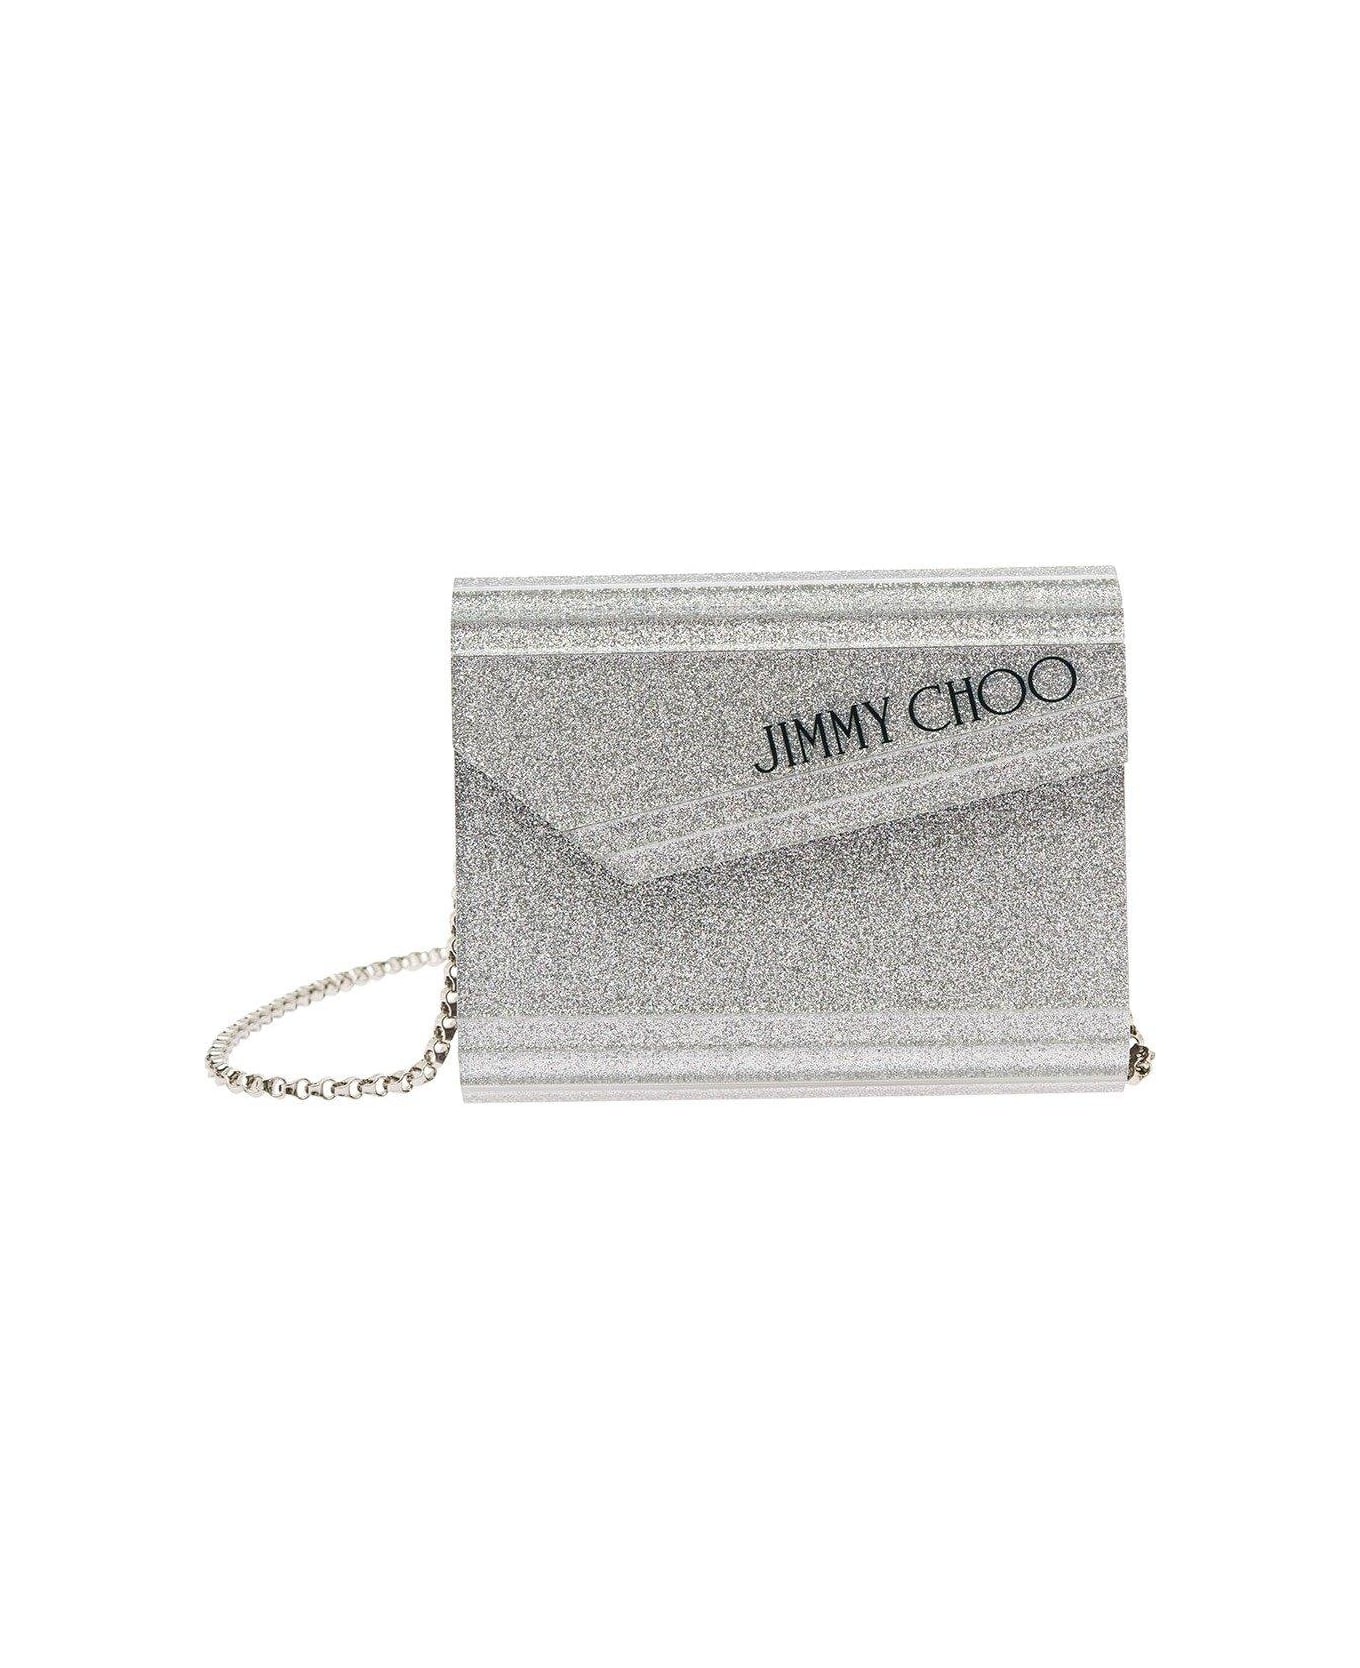 Jimmy Choo Candy Logo Printed Clutch Bag - GREY